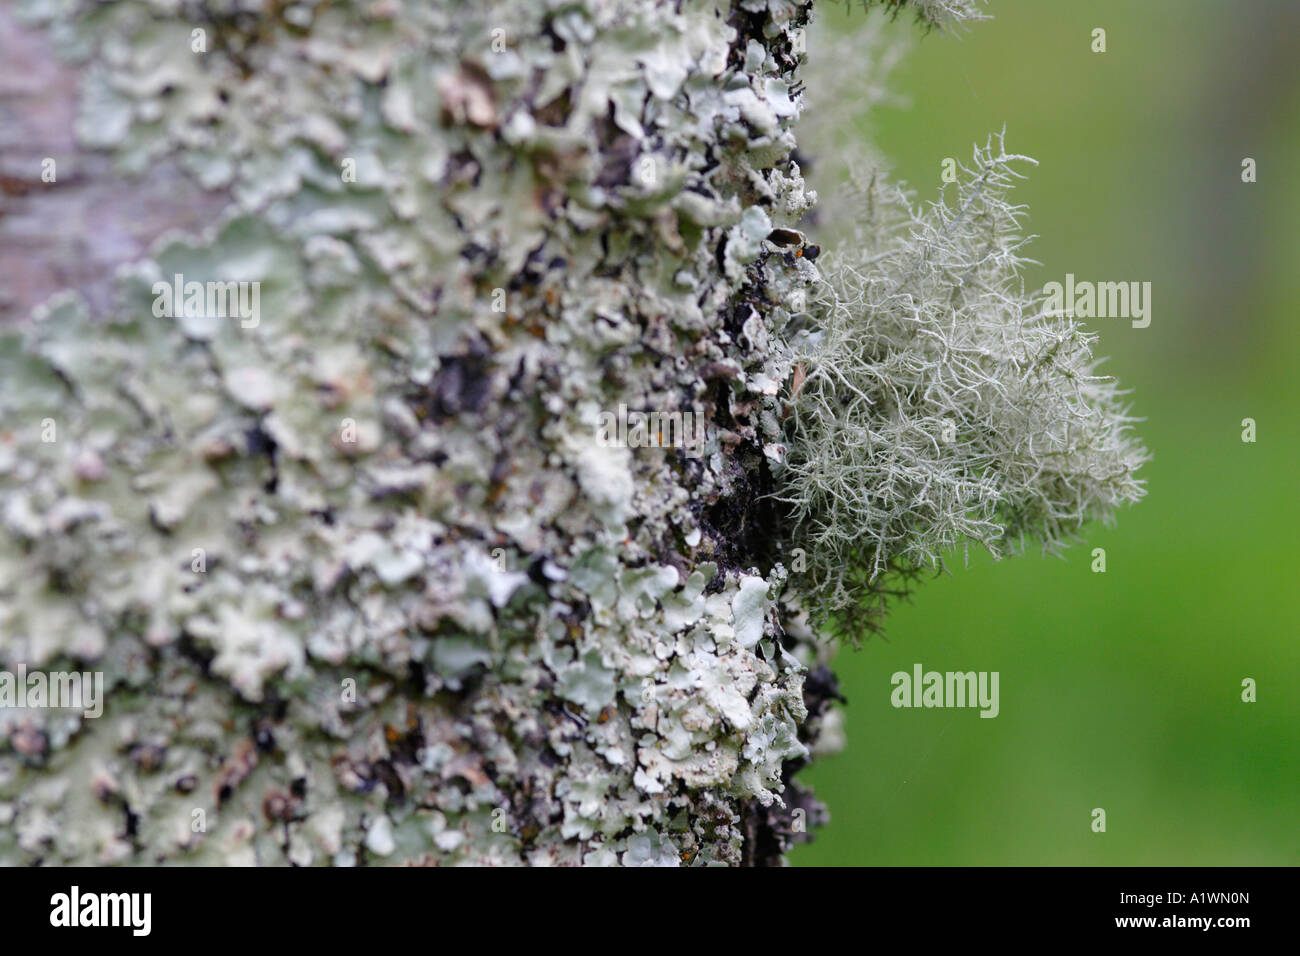 Lichen (Parmelia caperata) growing on tree trunk Stock Photo